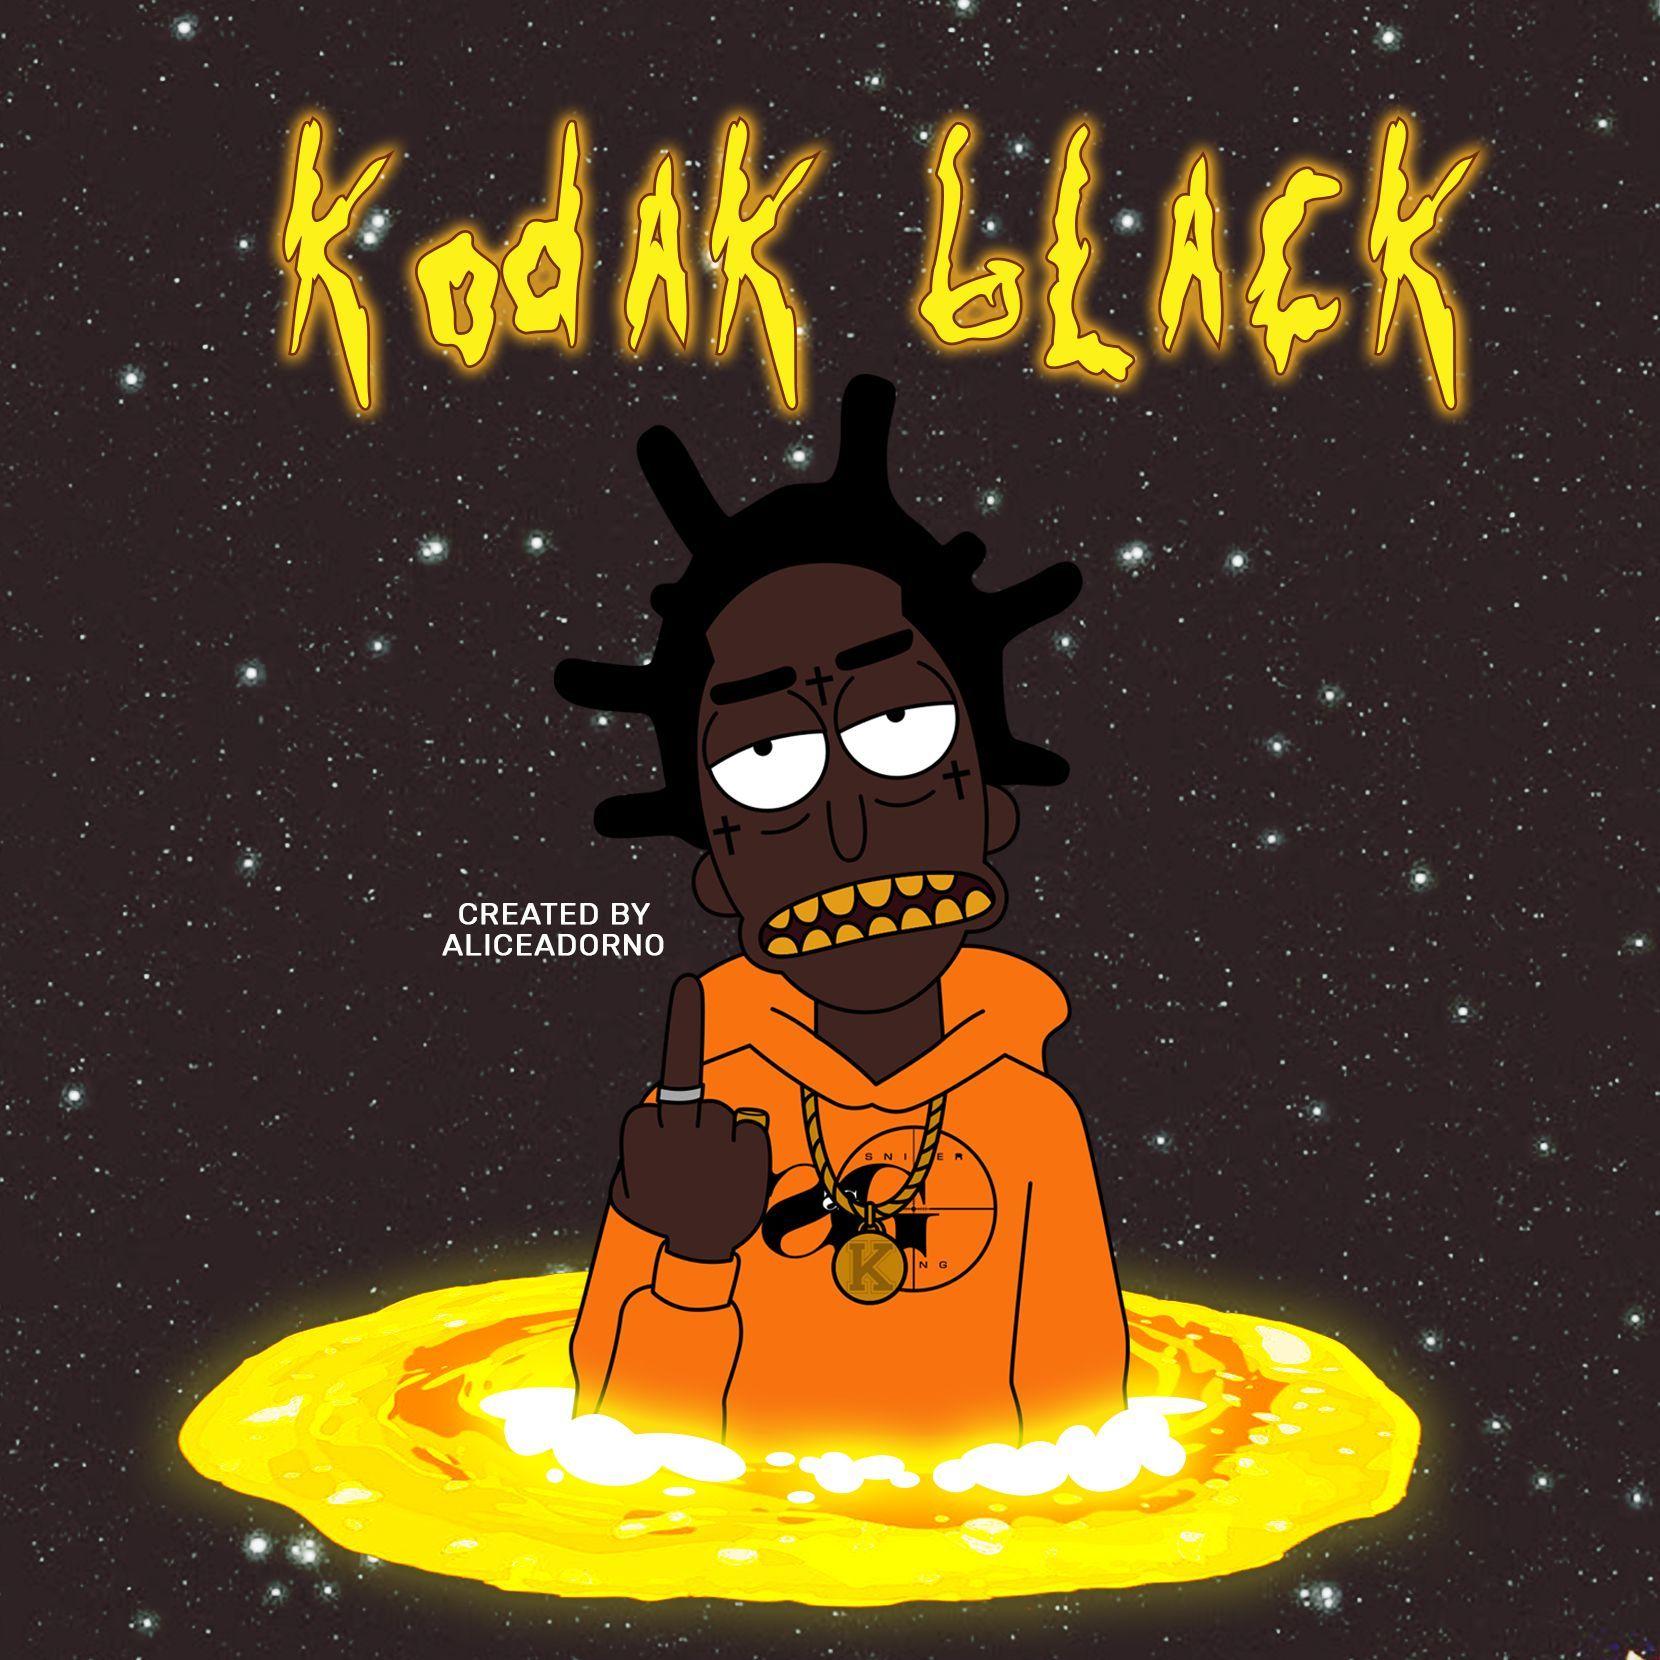 Kodak Black estilo Rick and Morty #rickandmorty #adultswin # kodakblack #kodak #projectbaby #al. Kodak black wallpaper, Kodak black, Instagram cartoon